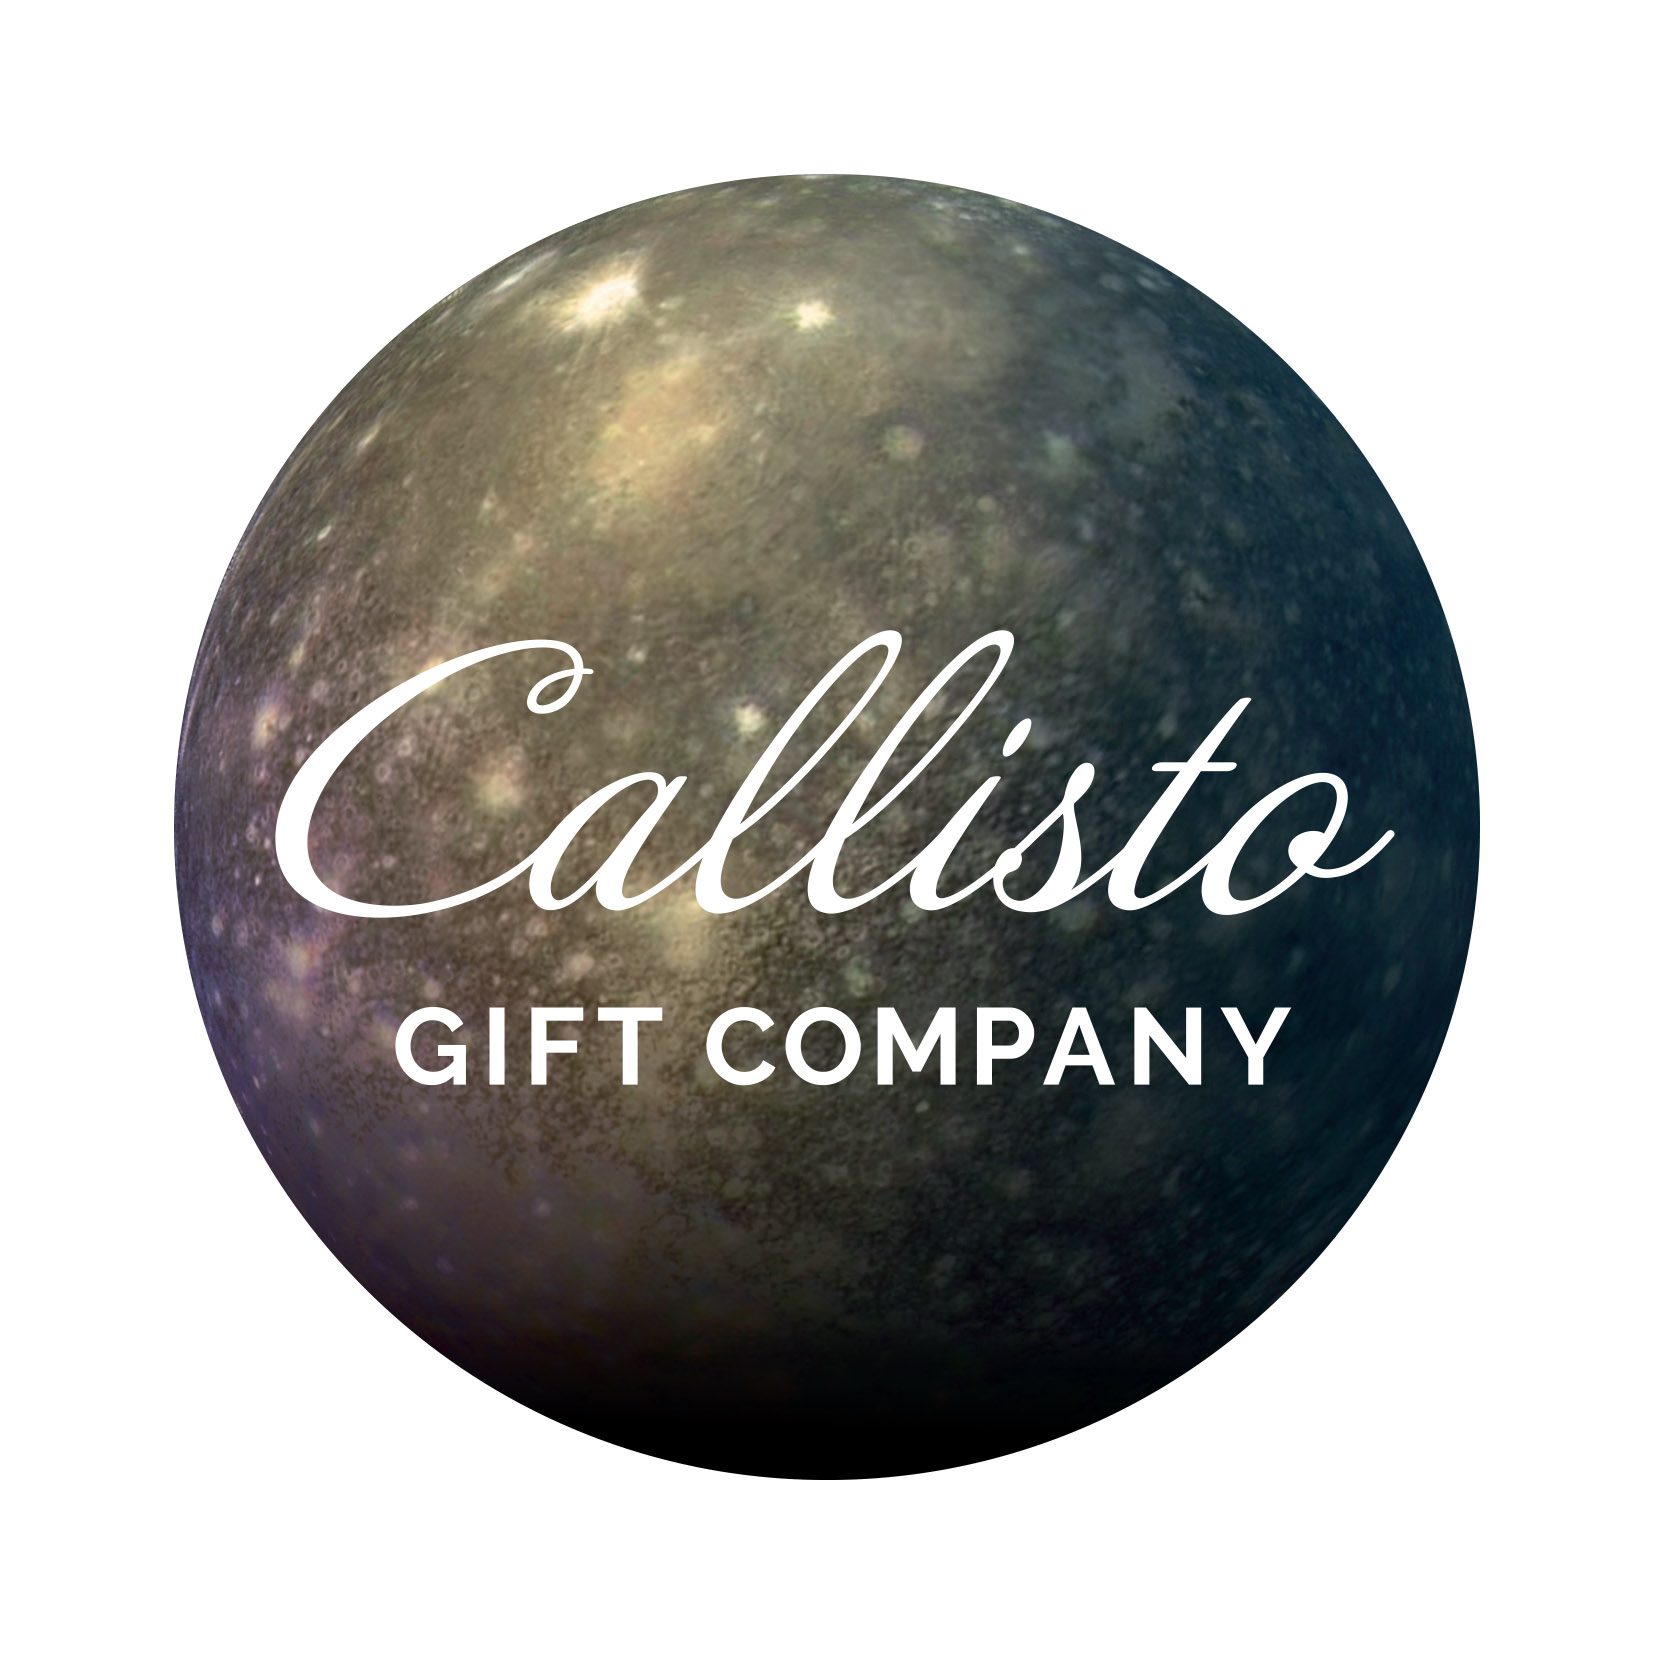 Callisto Gift Company